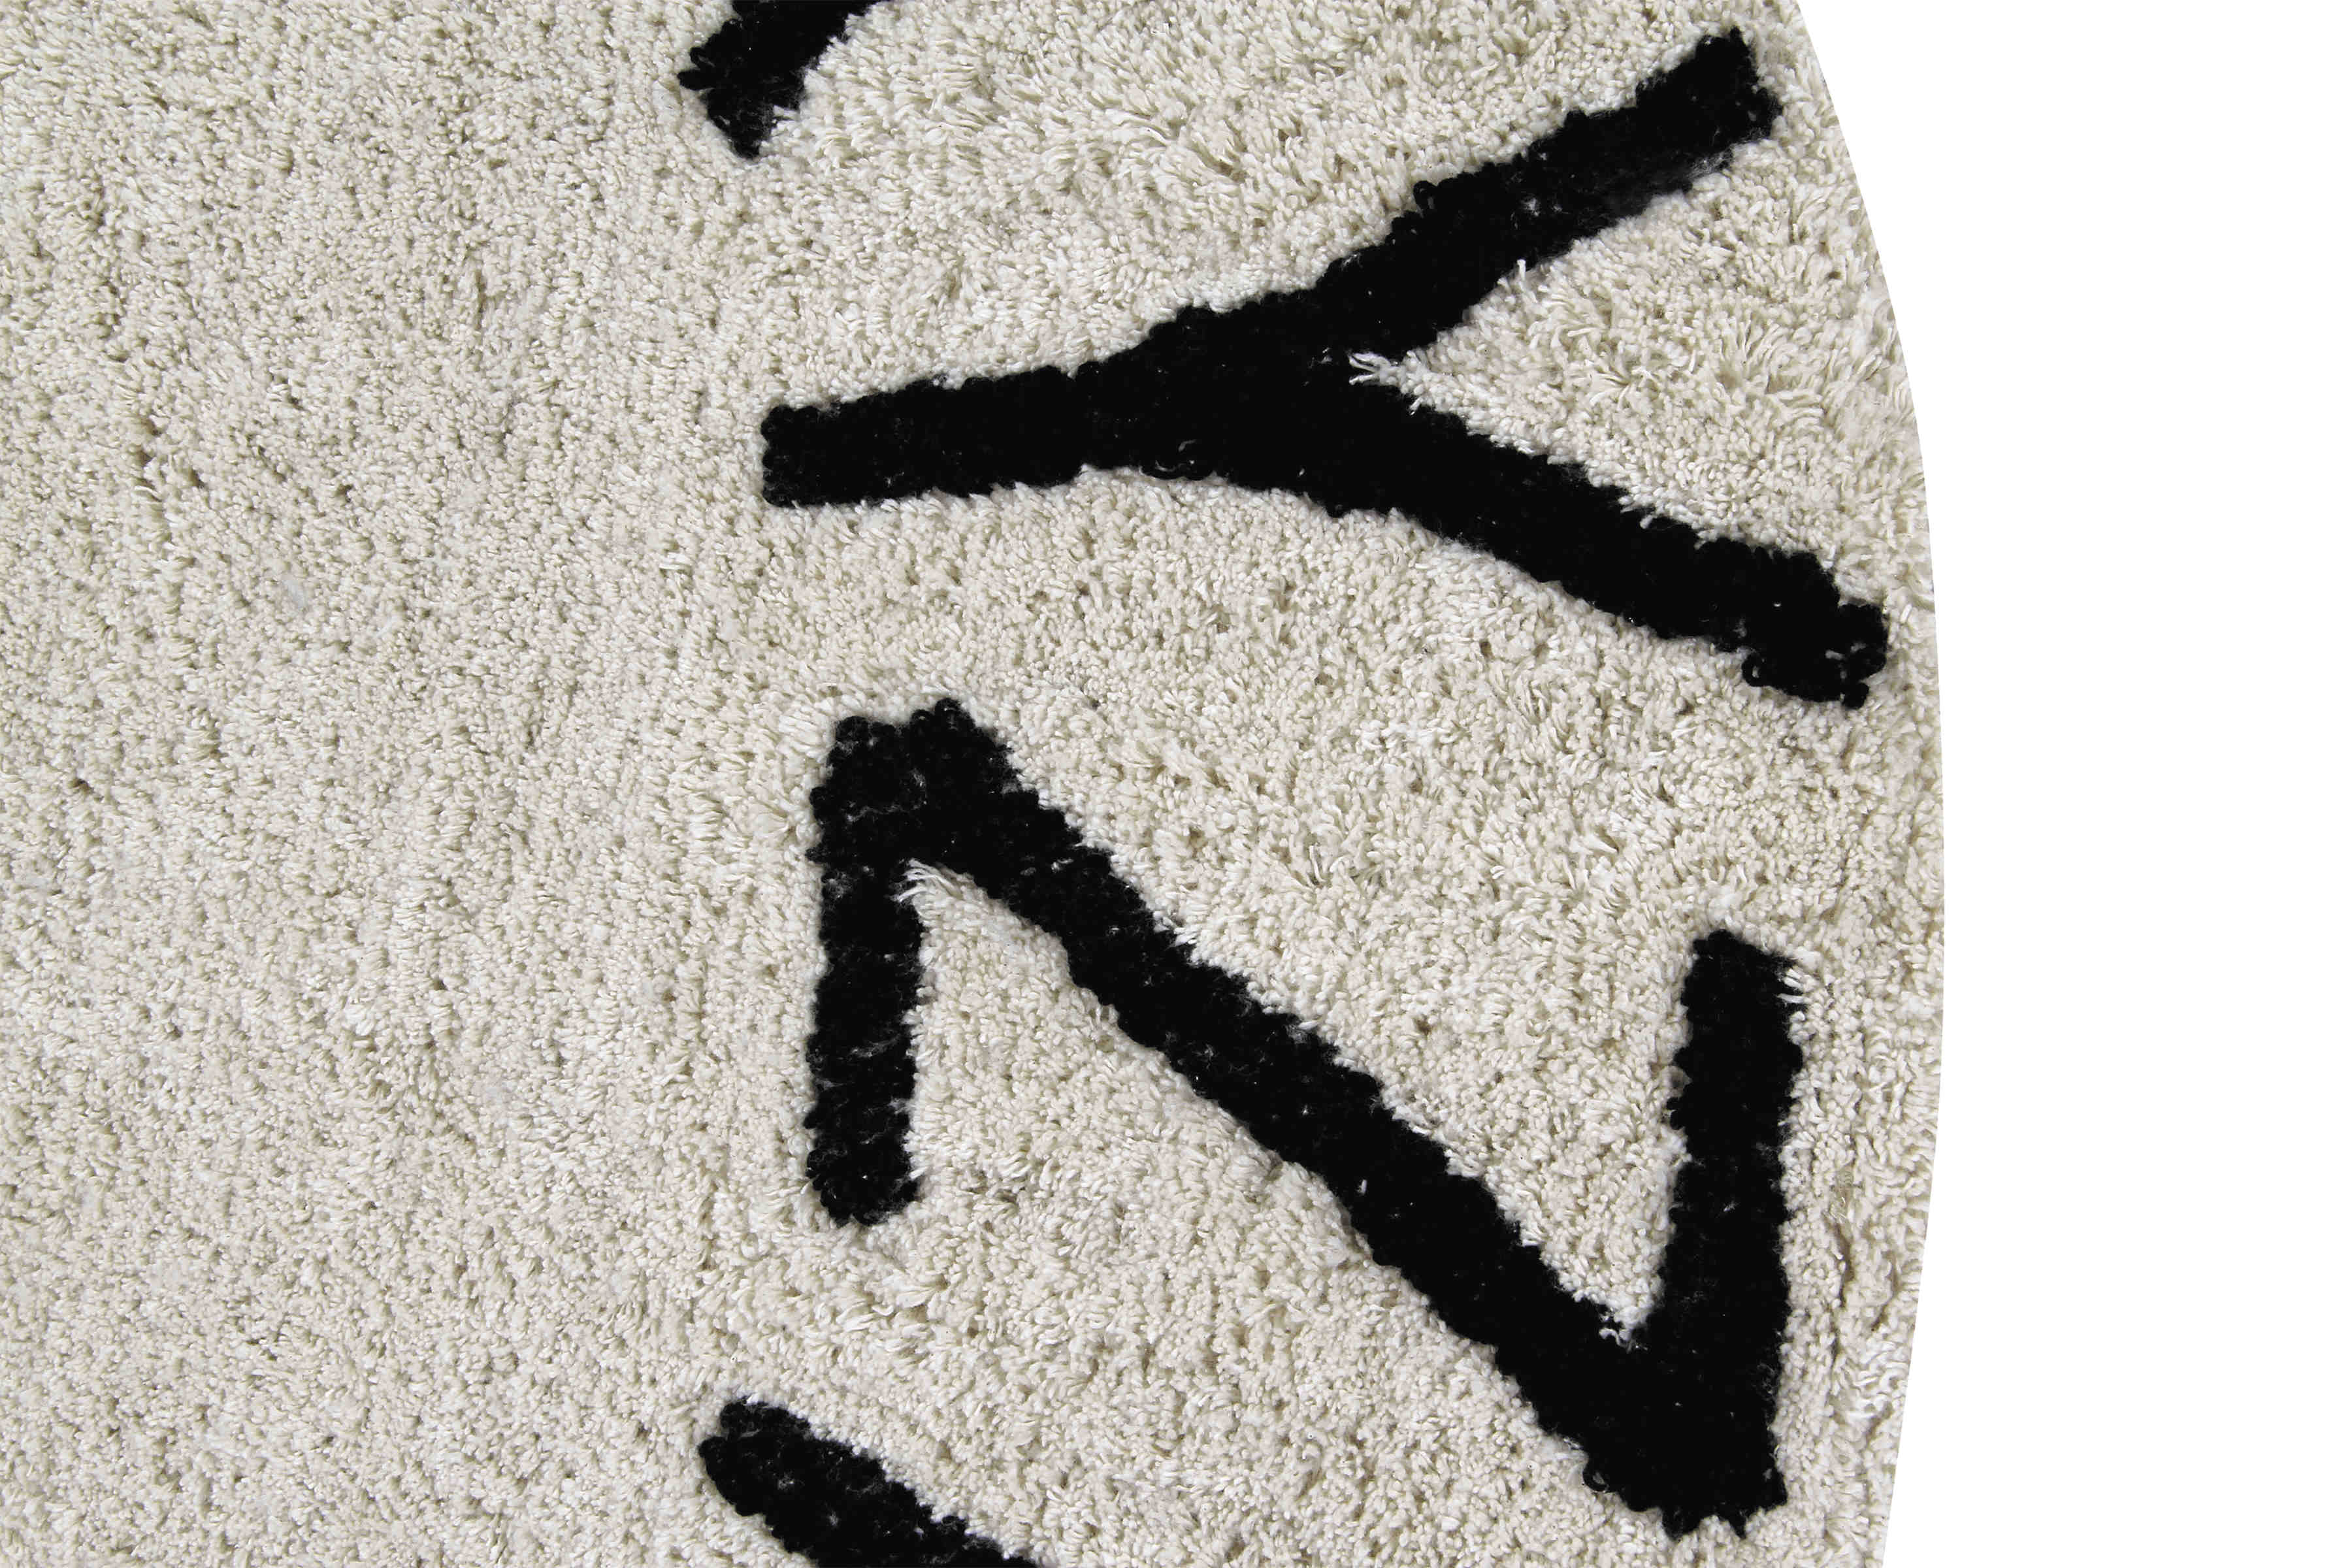 Circular white cotton rug decorated with a black alphabet border